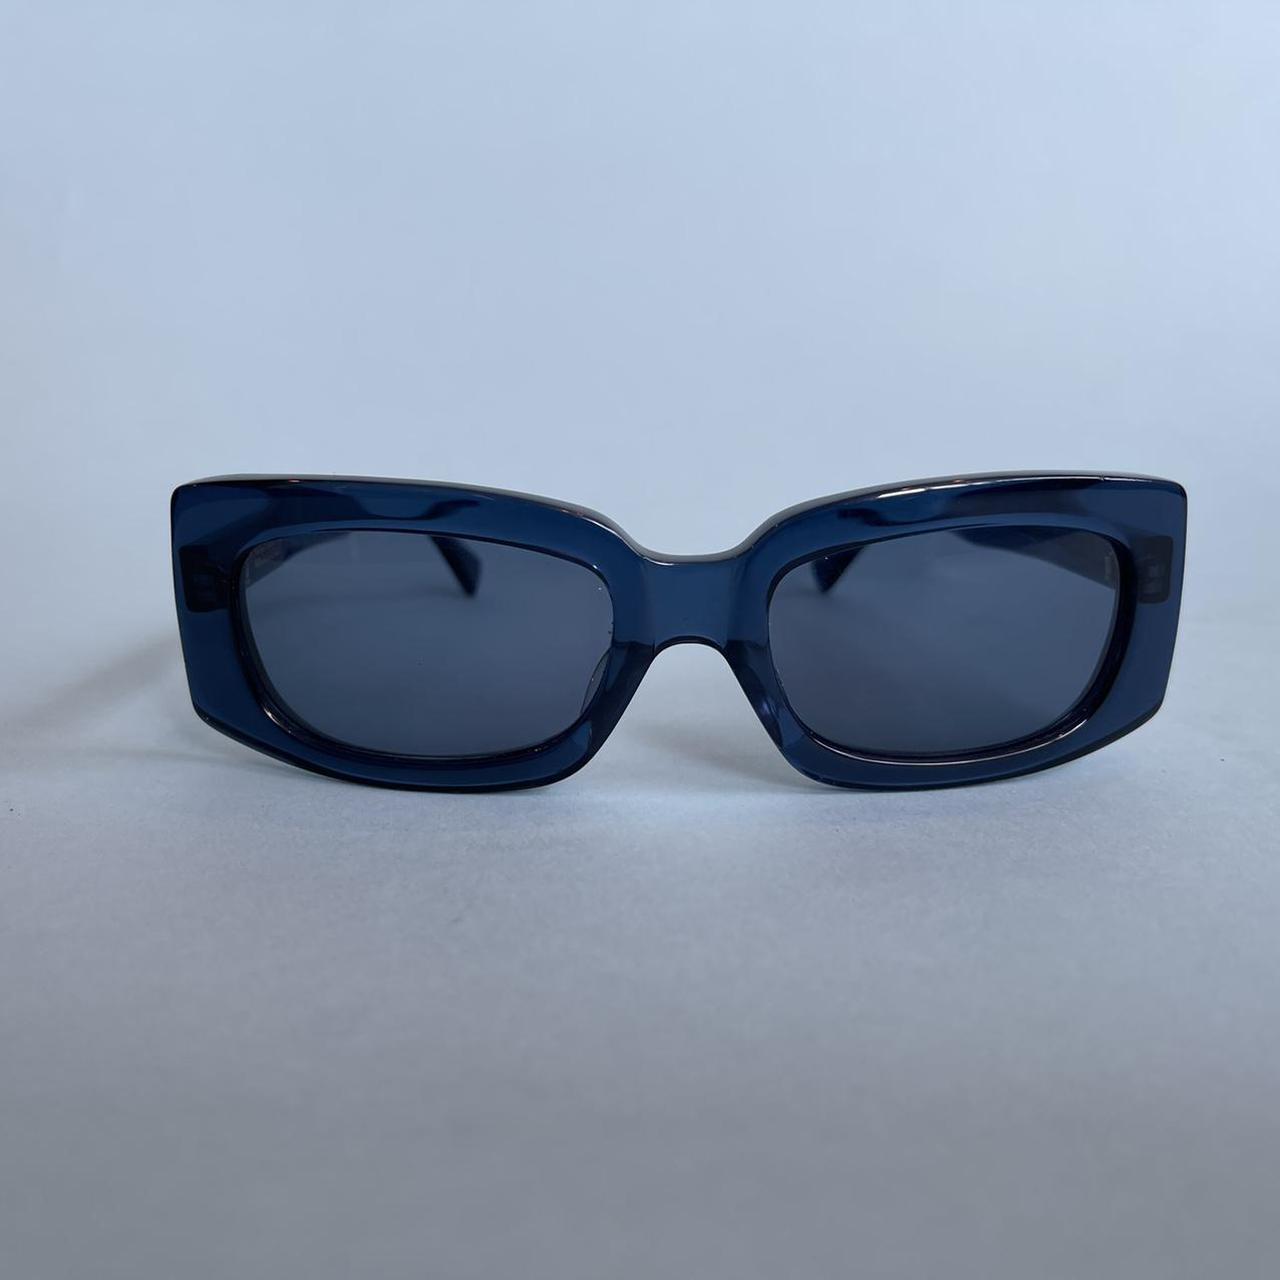 Undercover Women's Blue Sunglasses